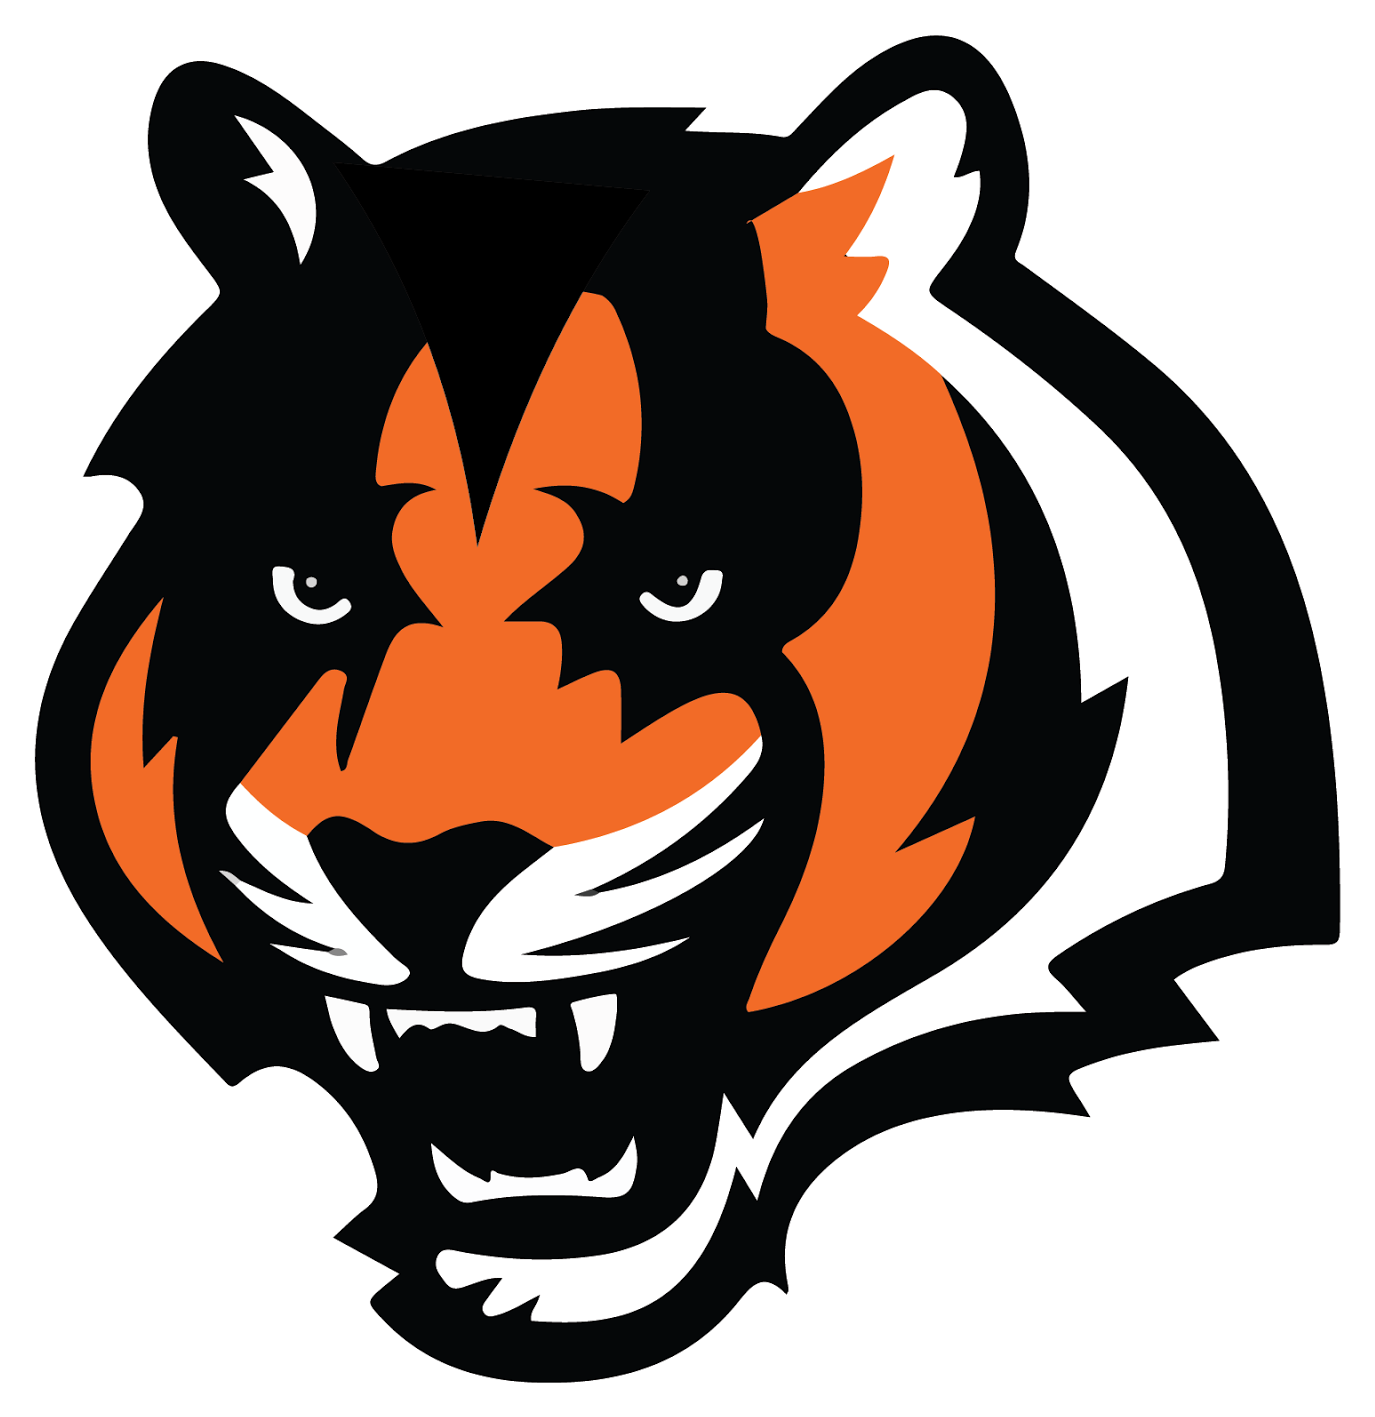 Cincinnati Bengals Logo PNG